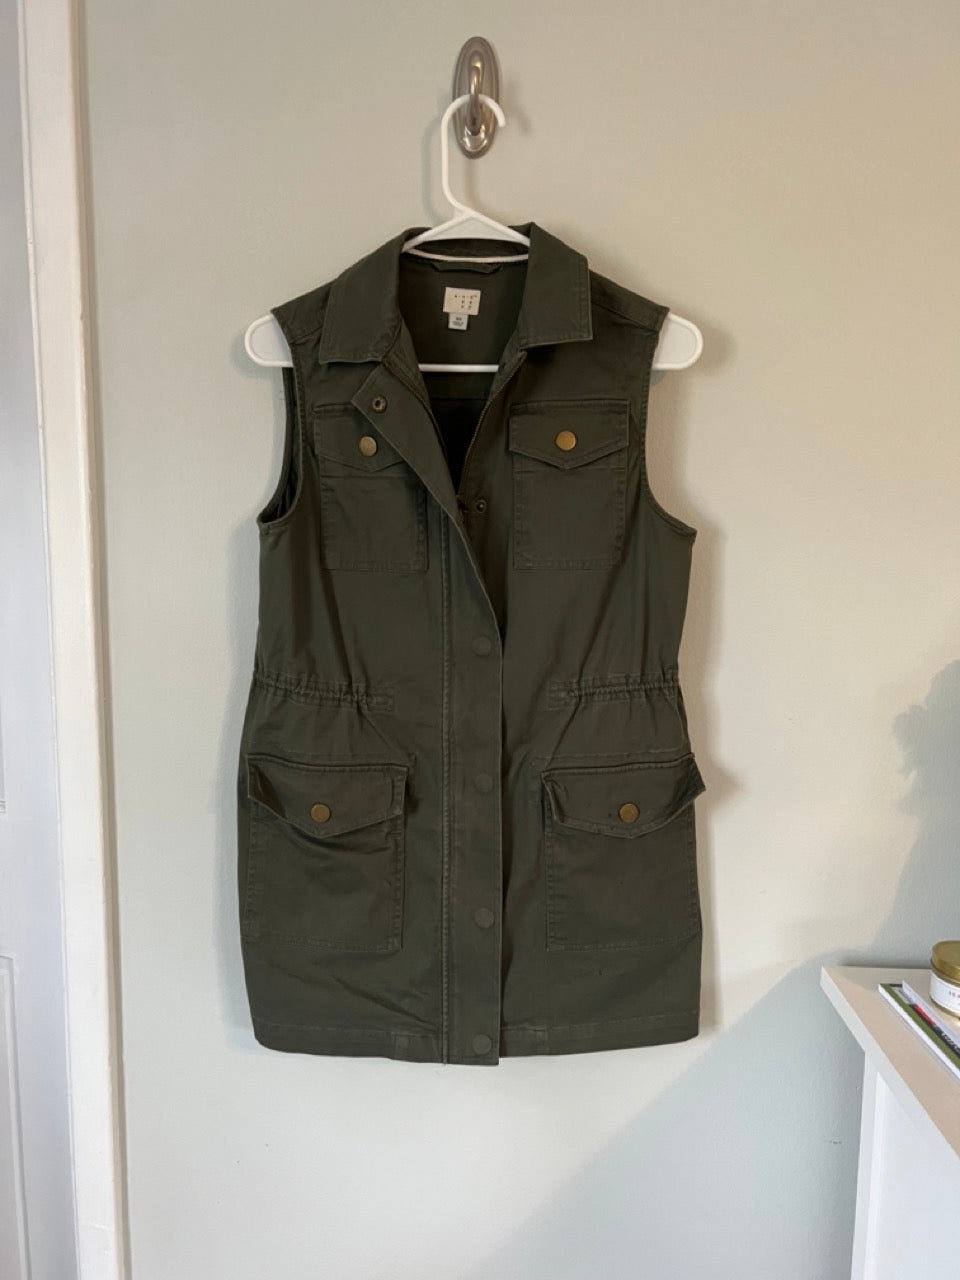 XS Women's A New Day dark green utility vest, GUC